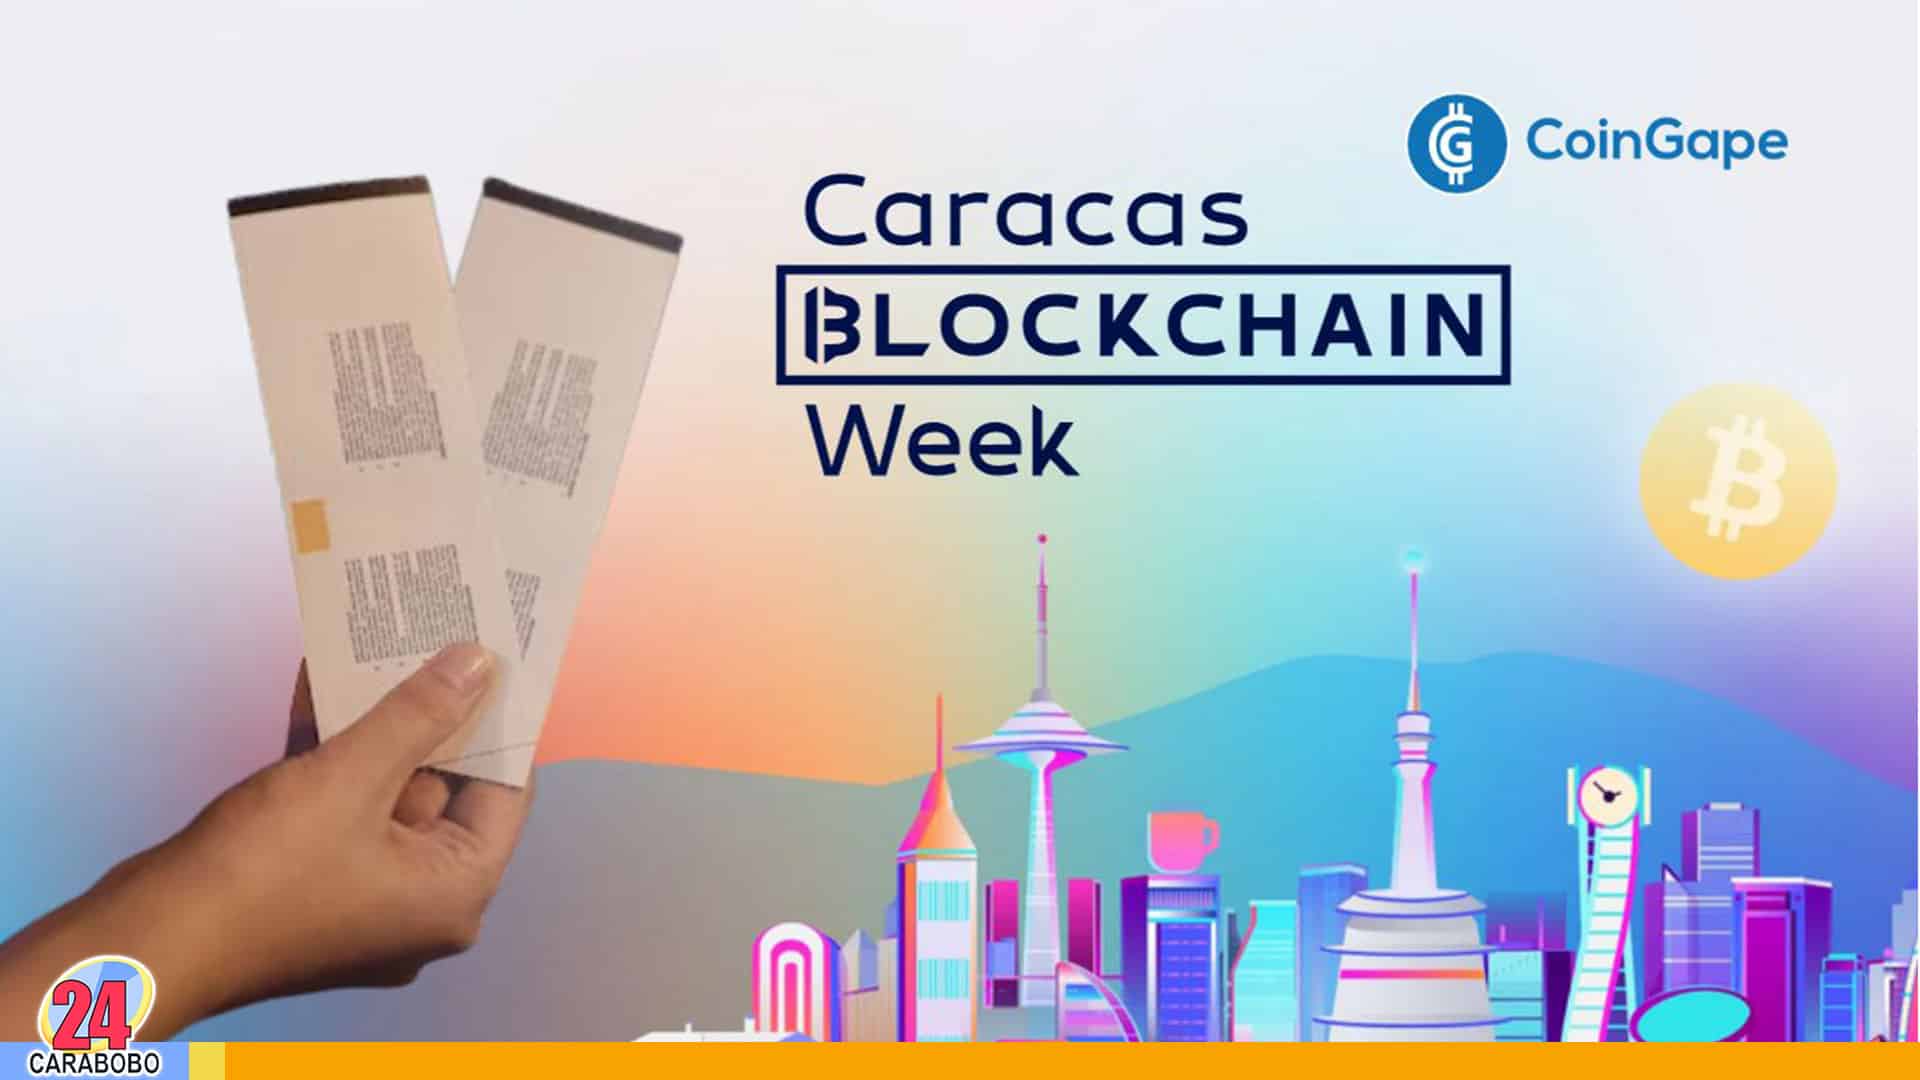 caracas blockchain week 2023